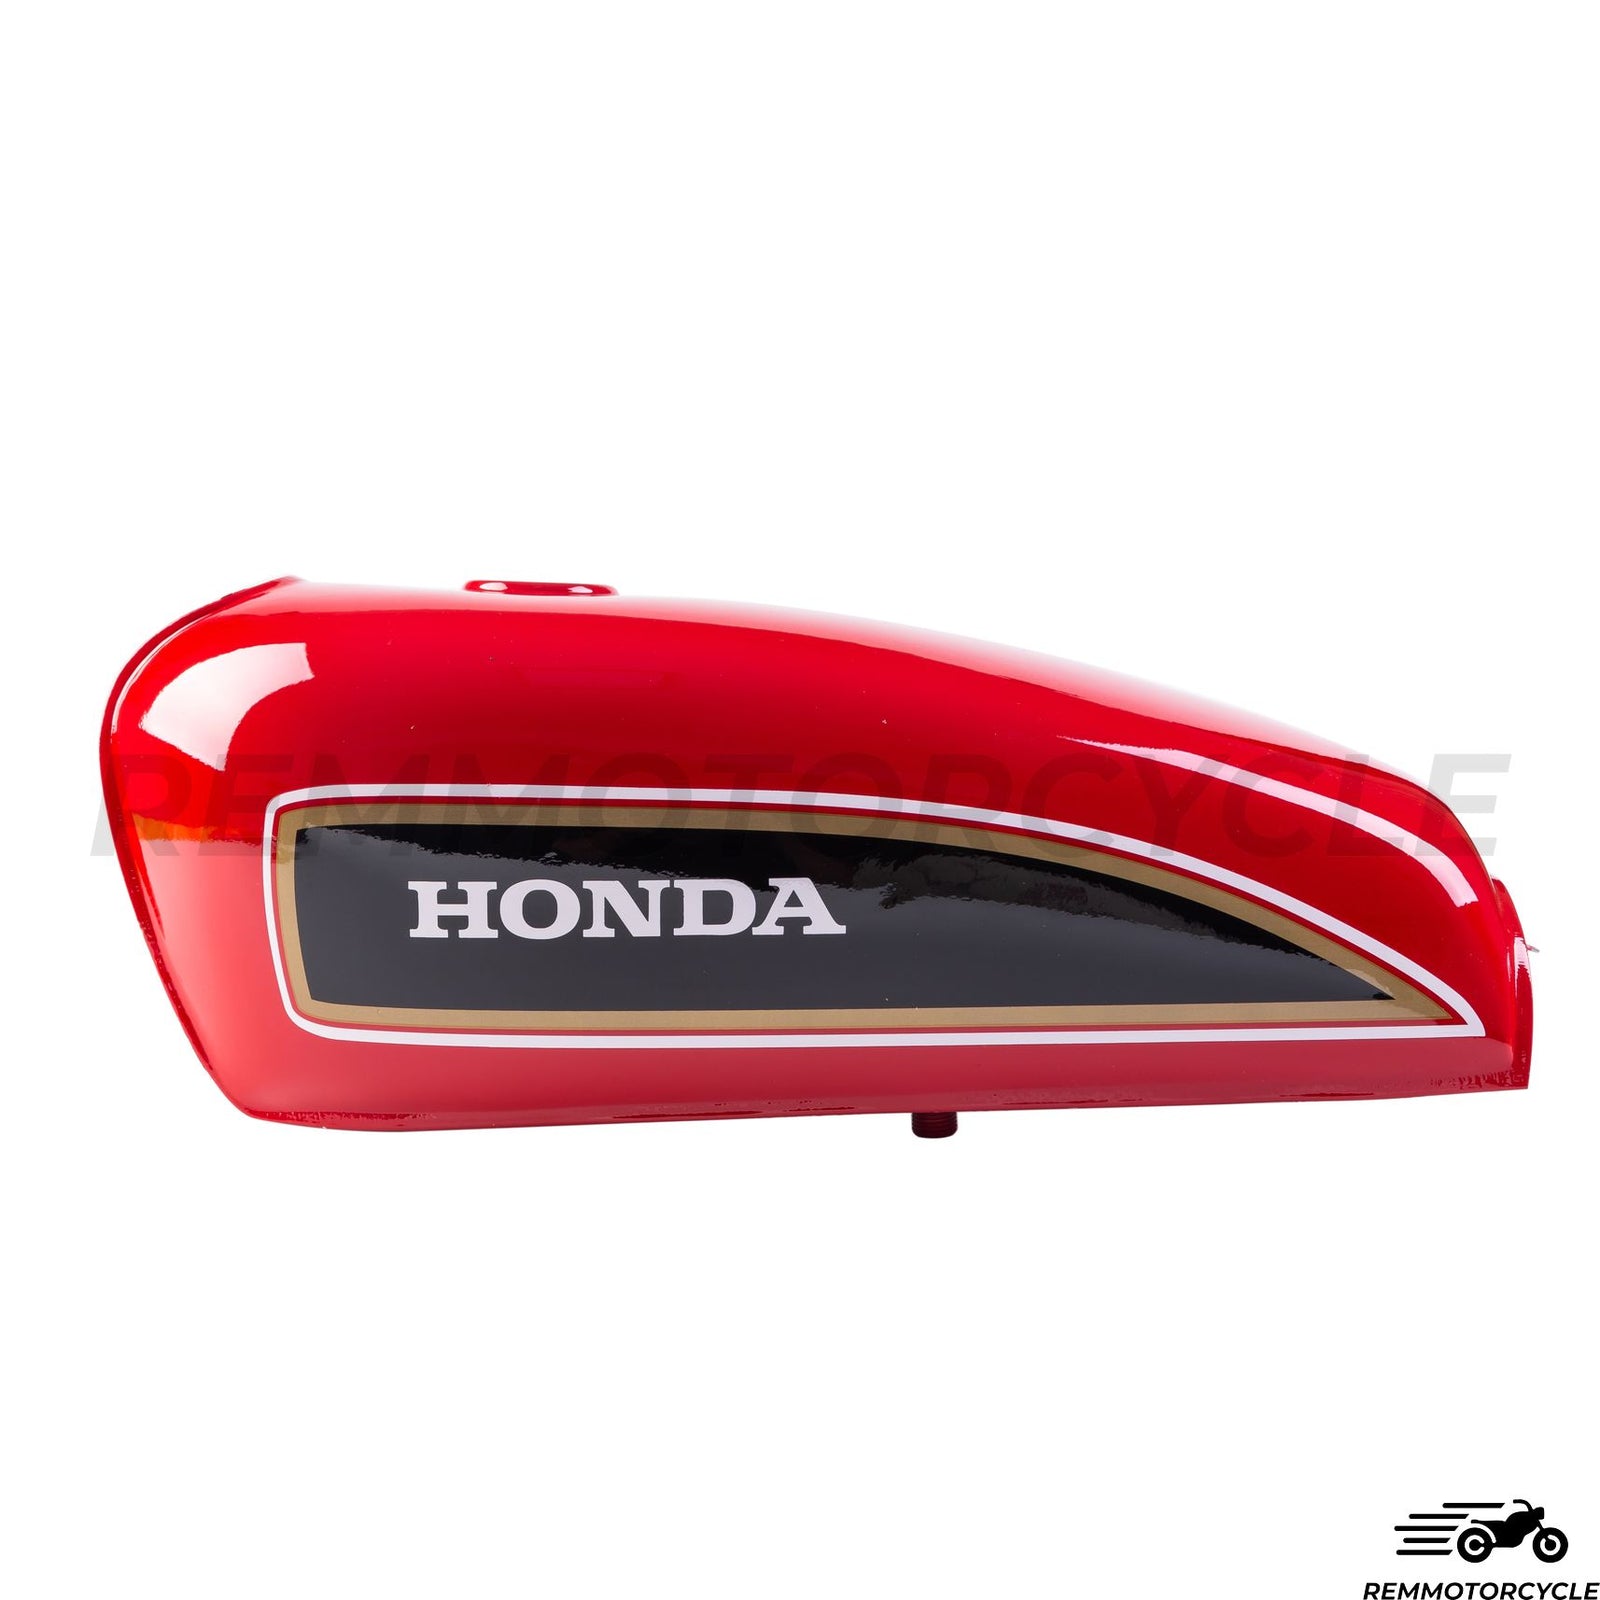 Honda Red CB Tank